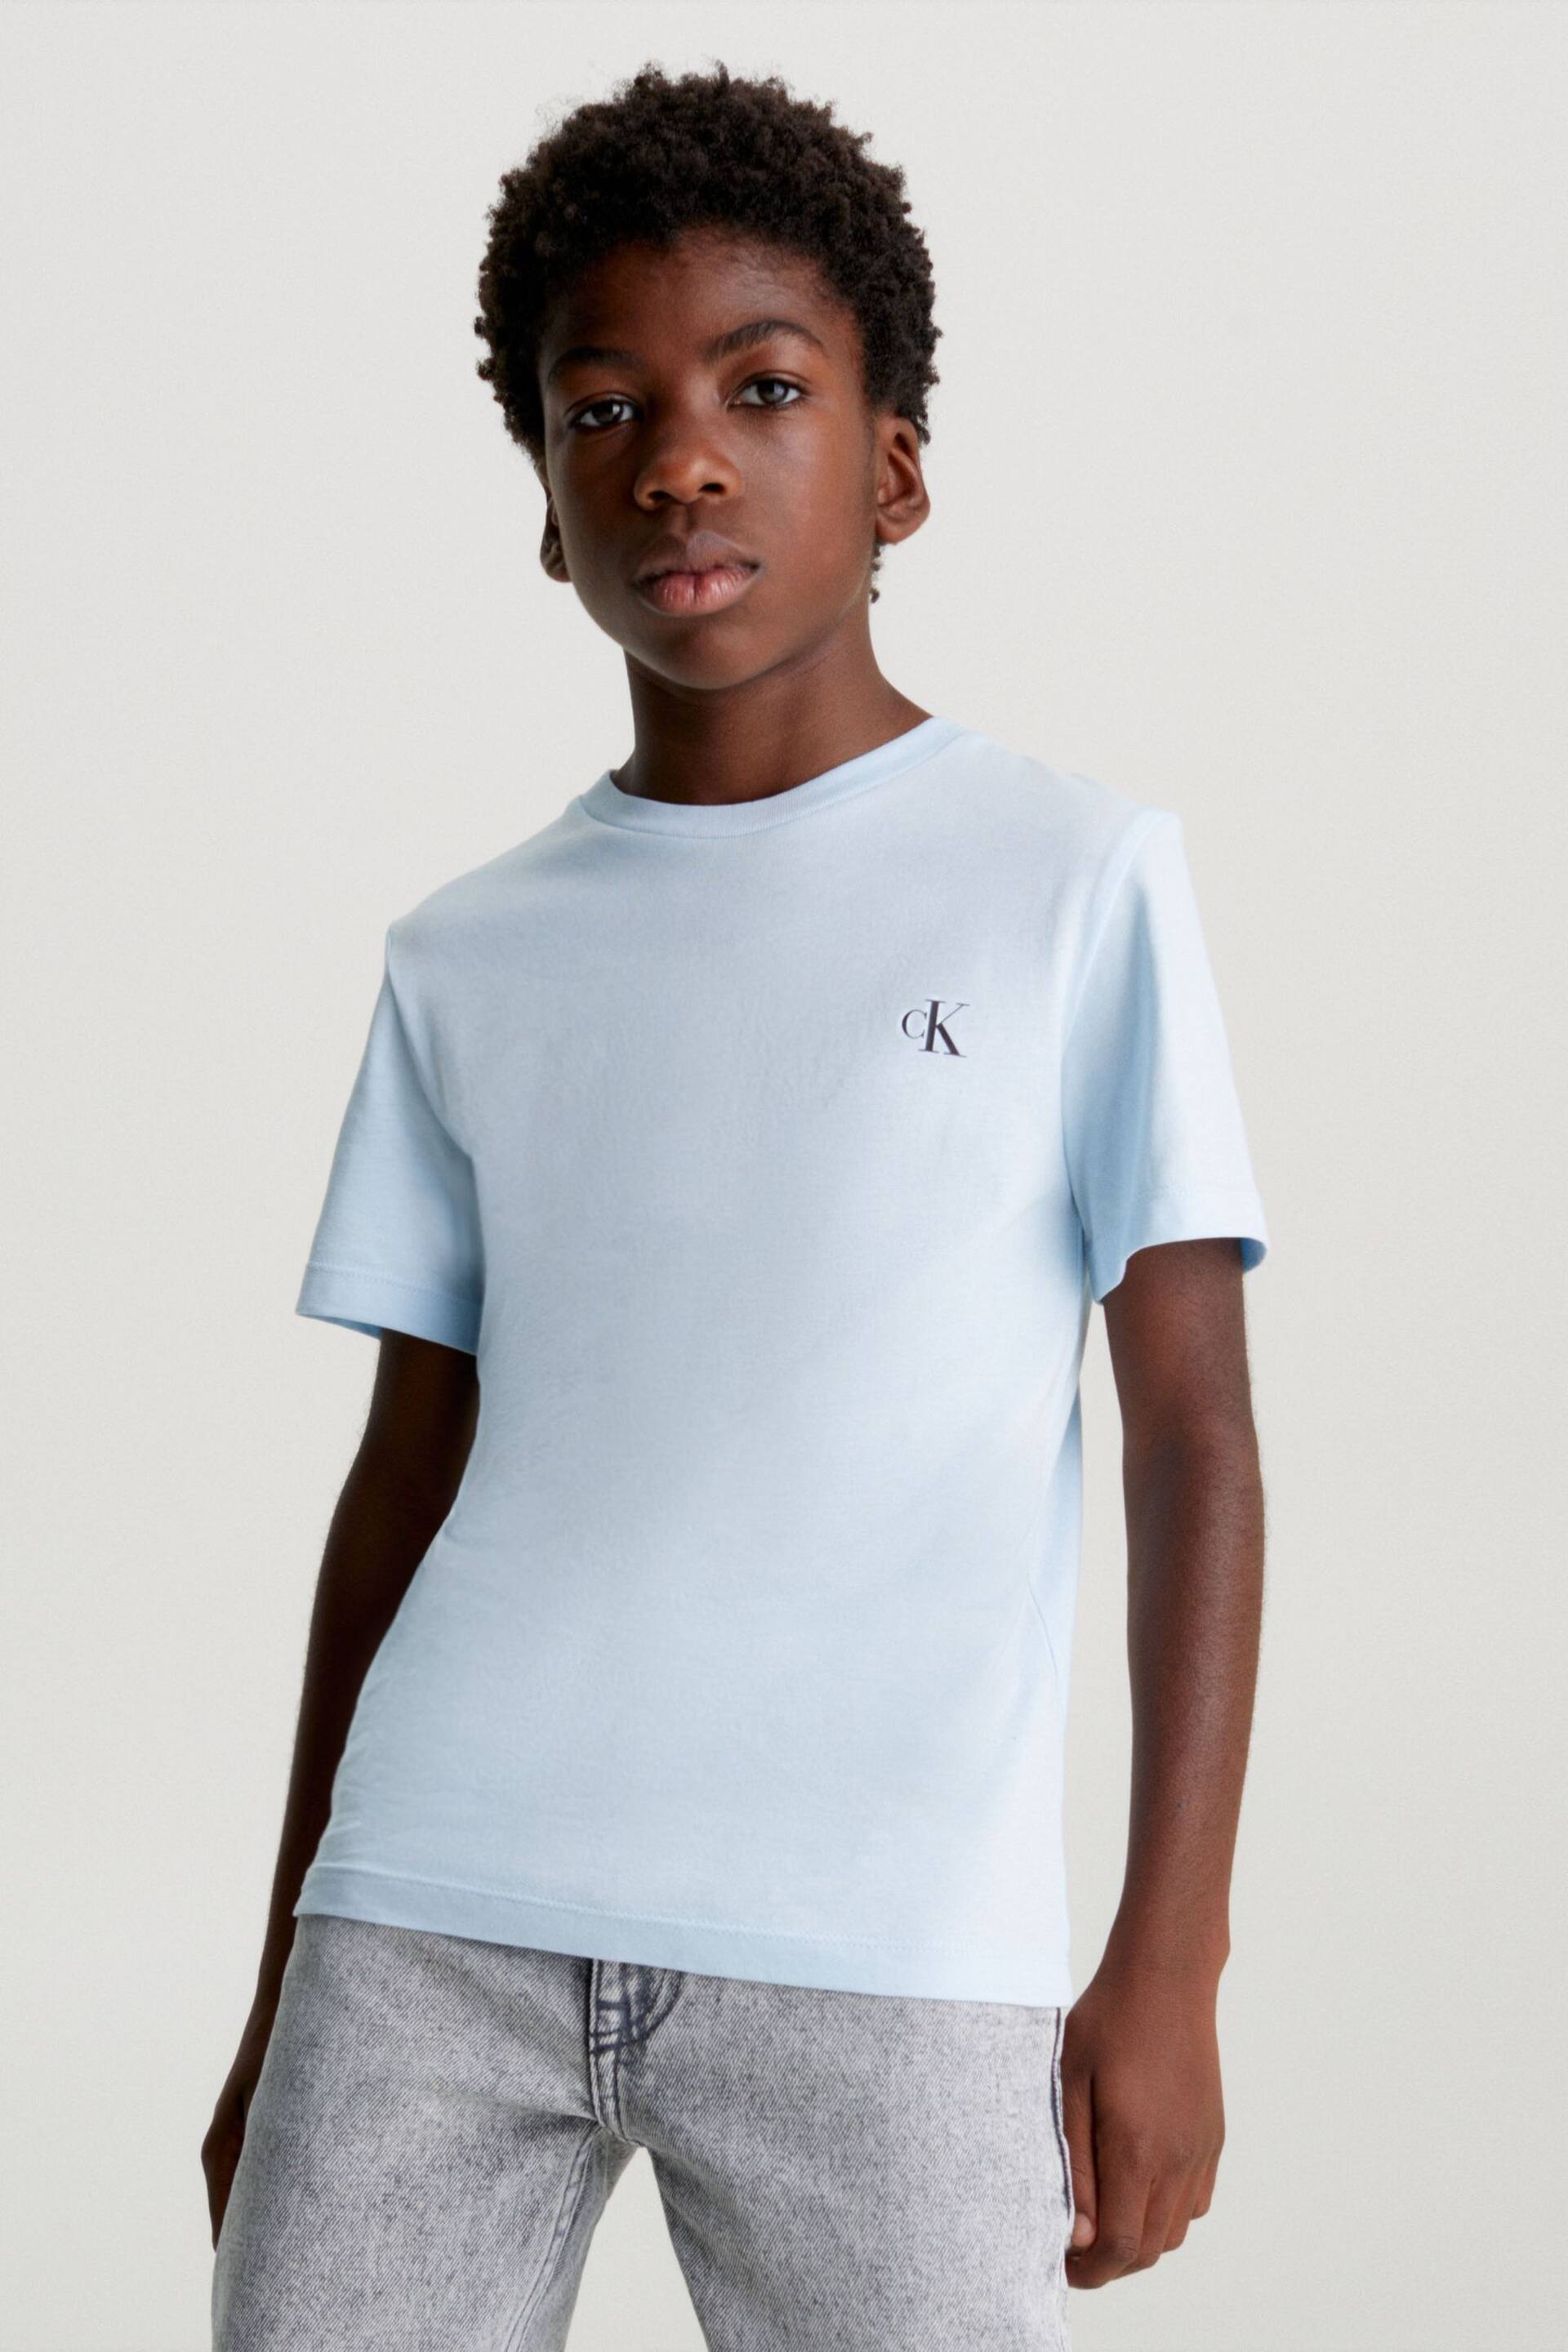 Calvin Klein Jeans Blue Monogram T-Shirt 2 Pack - Image 2 of 5